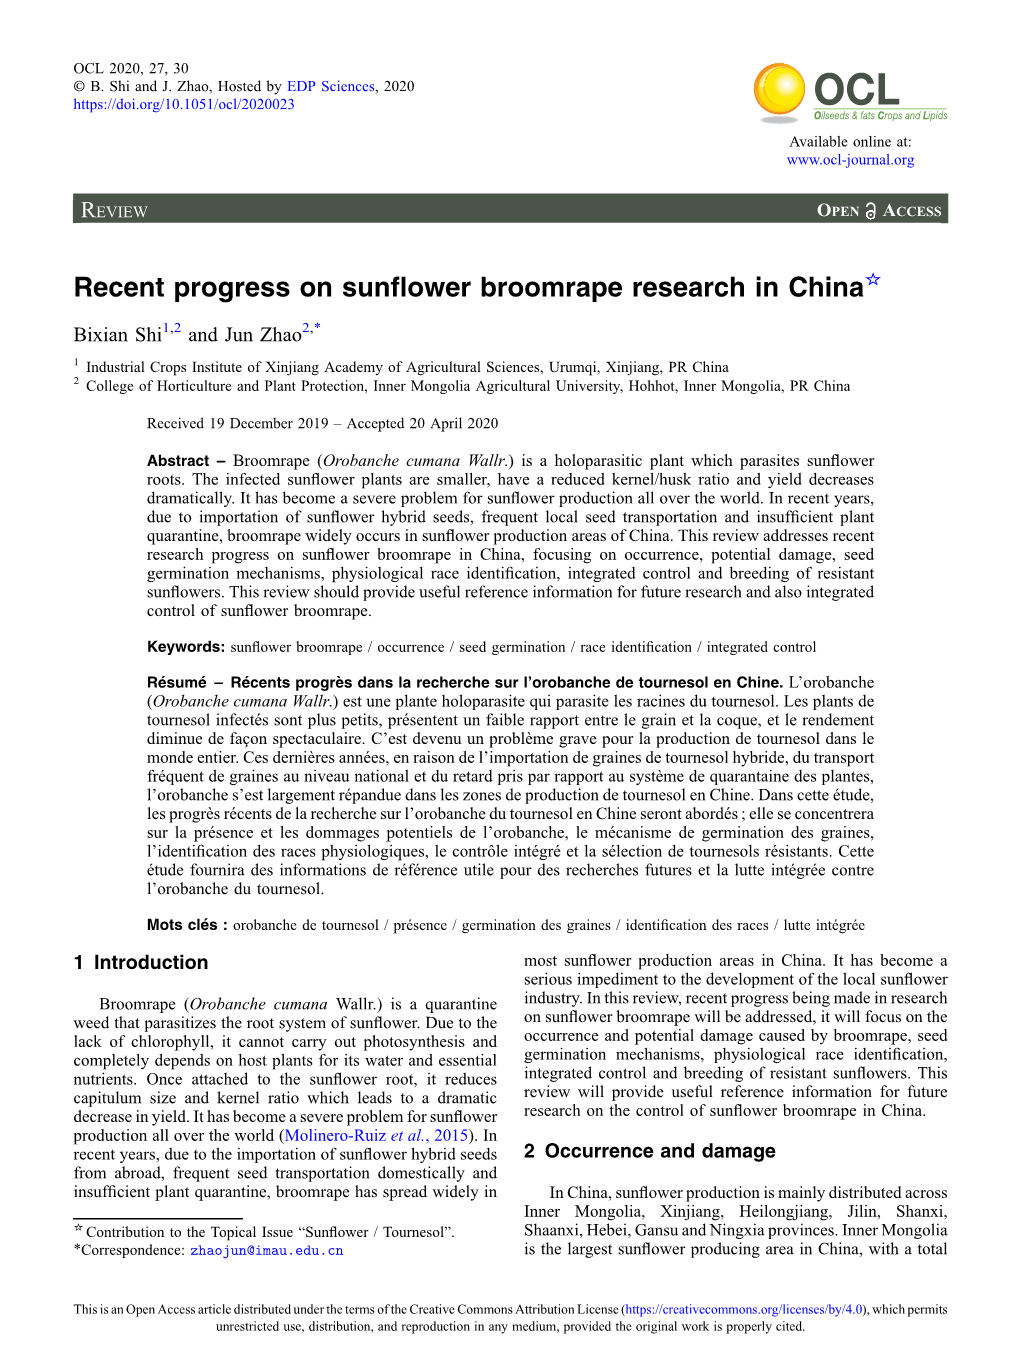 Recent Progress on Sunflower Broomrape Research in China